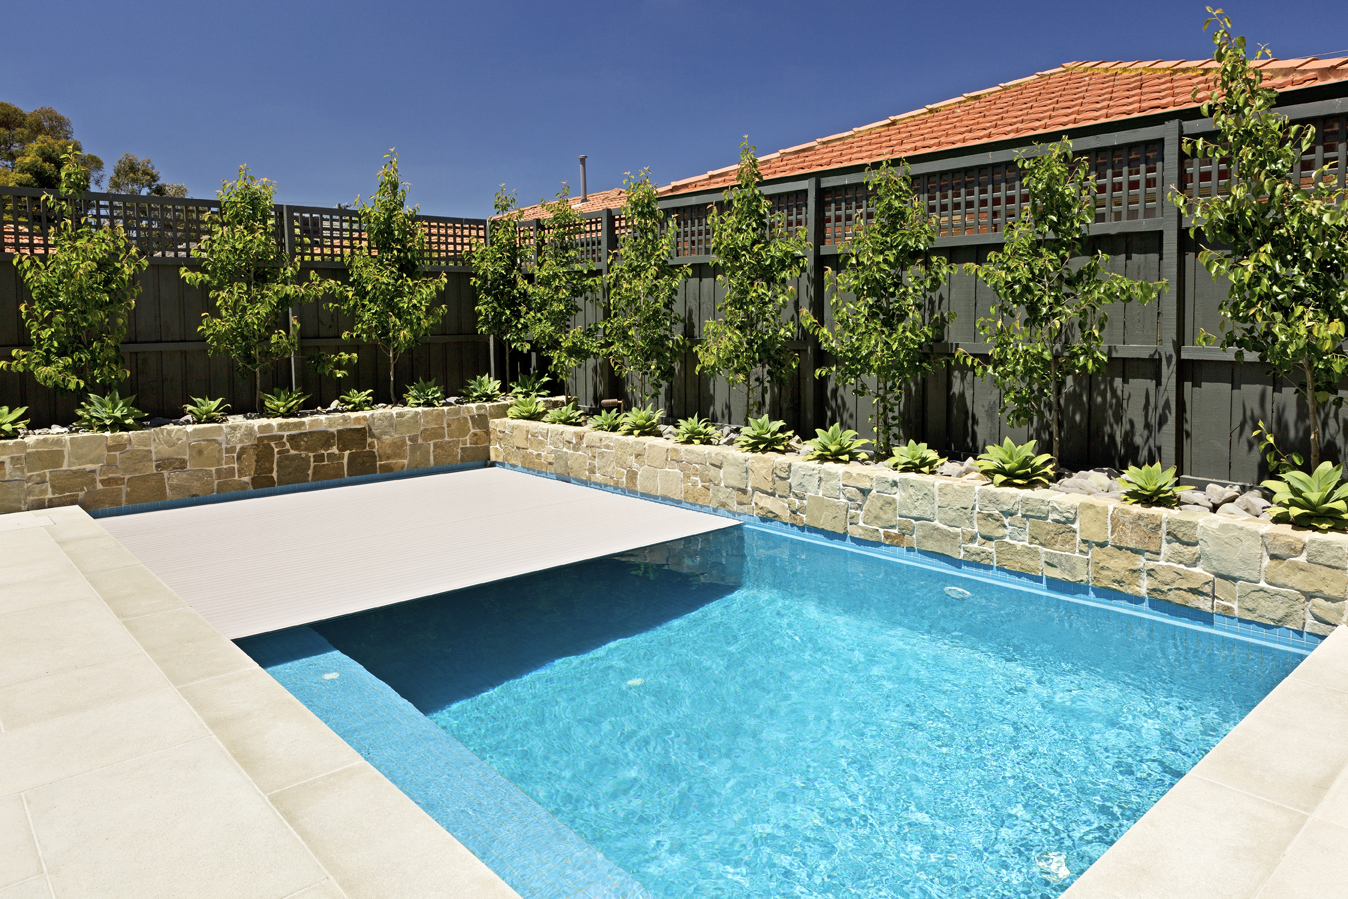 Aveley residential swimming pool